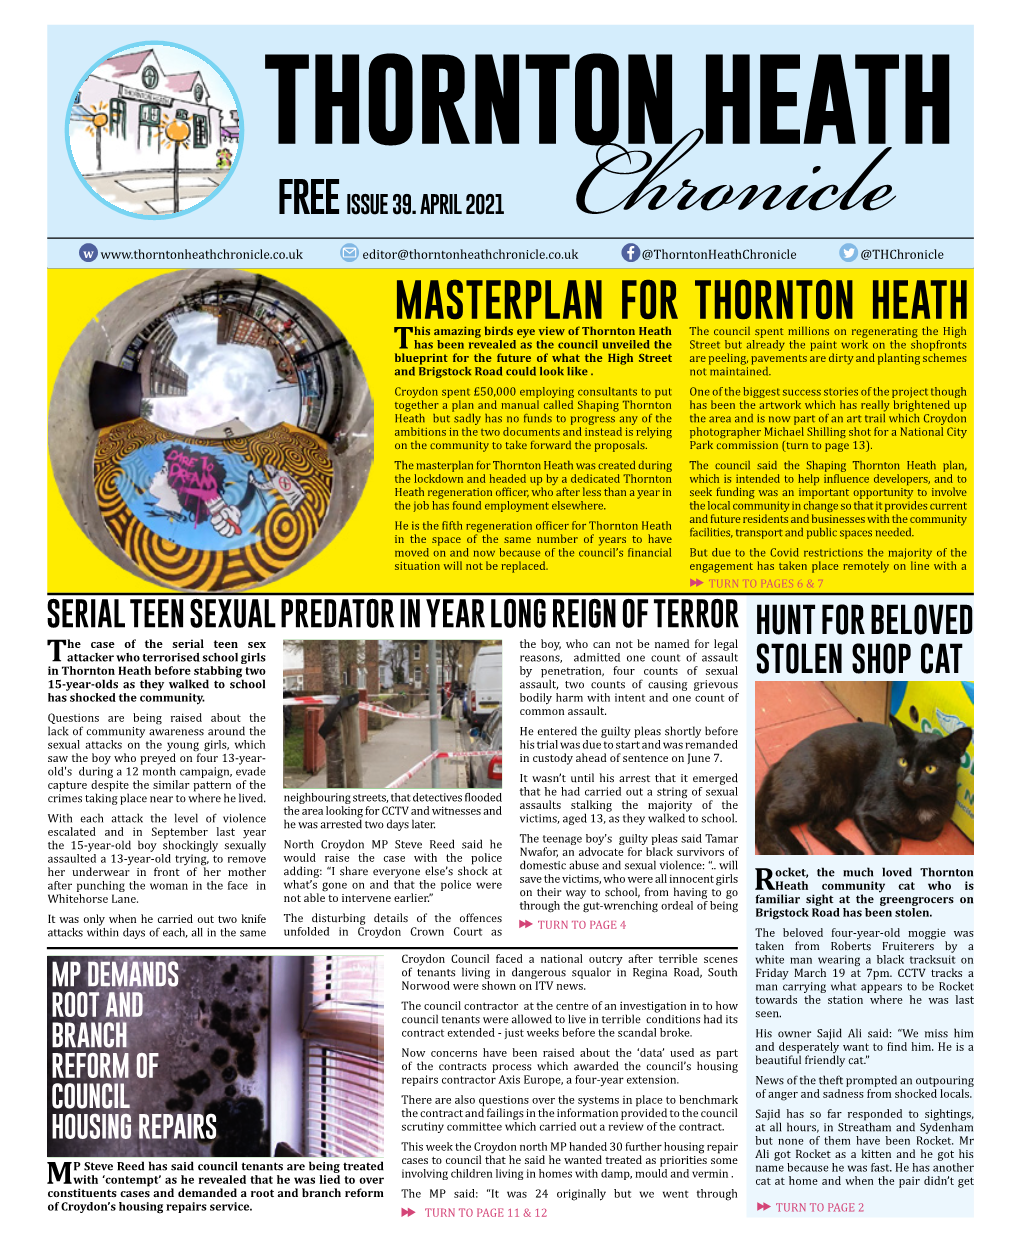 Masterplan for Thornton Heath